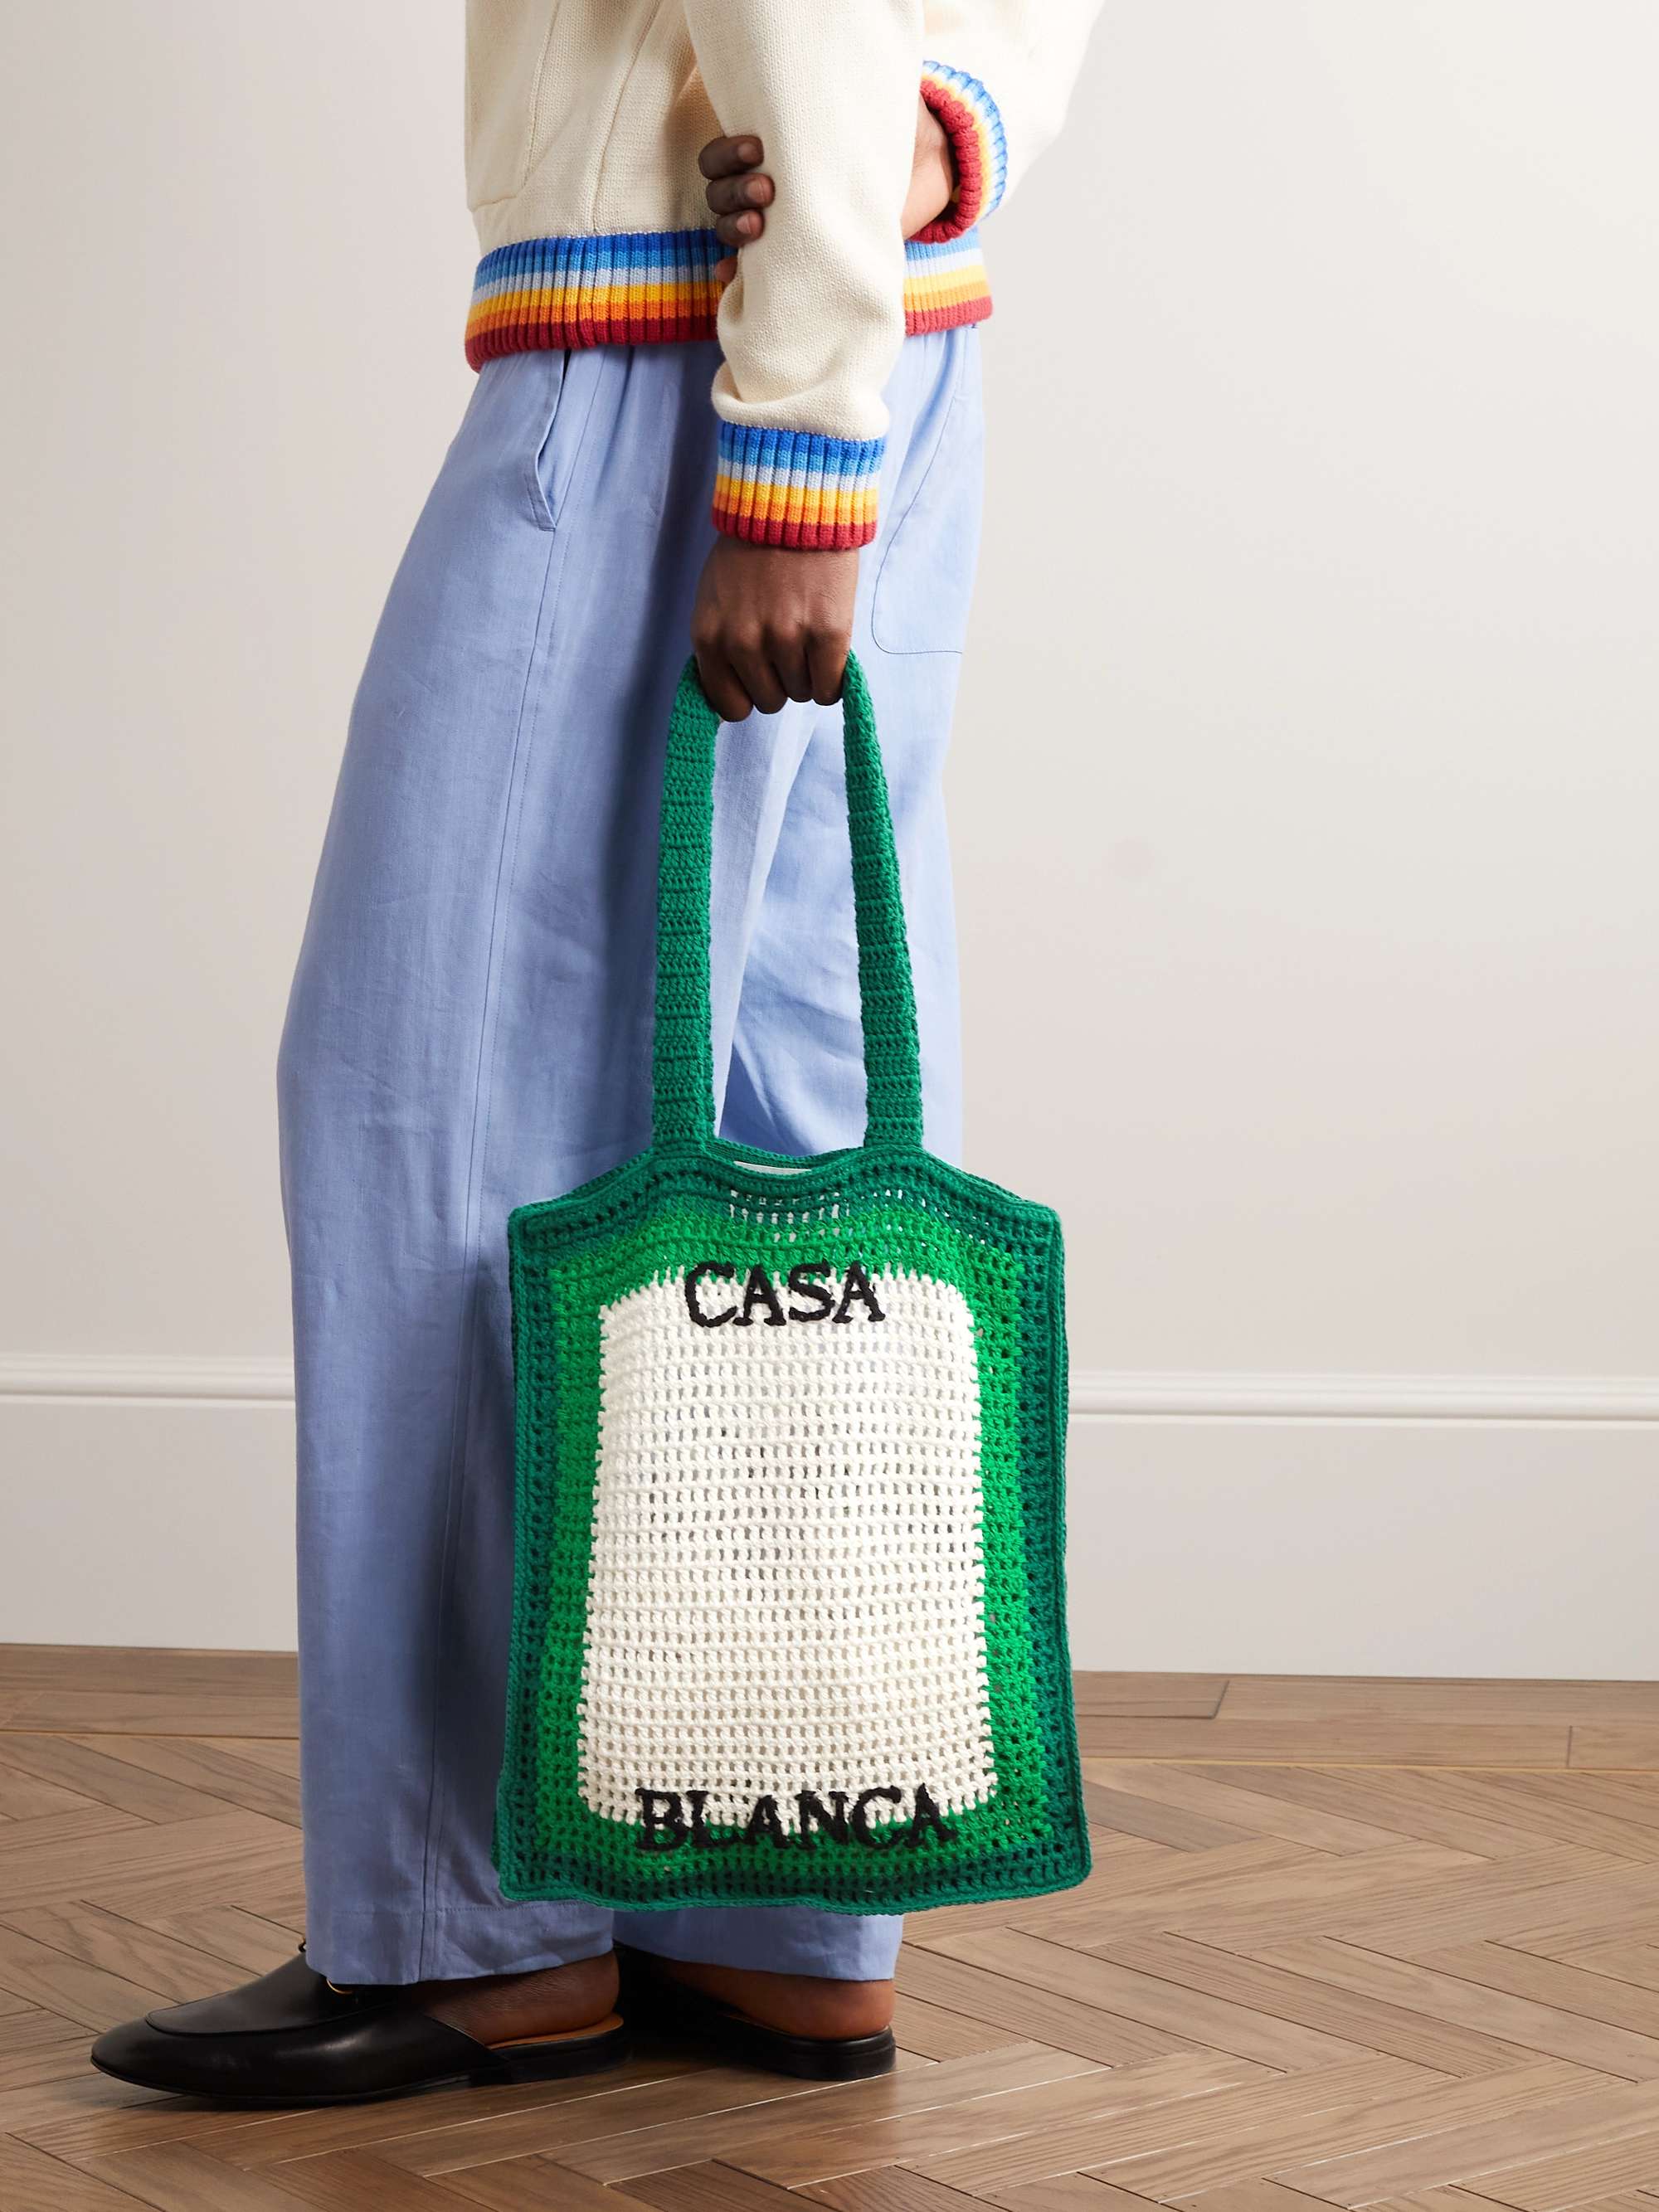 CASABLANCA Logo-Embroidered Crocheted Cotton Tote Bag